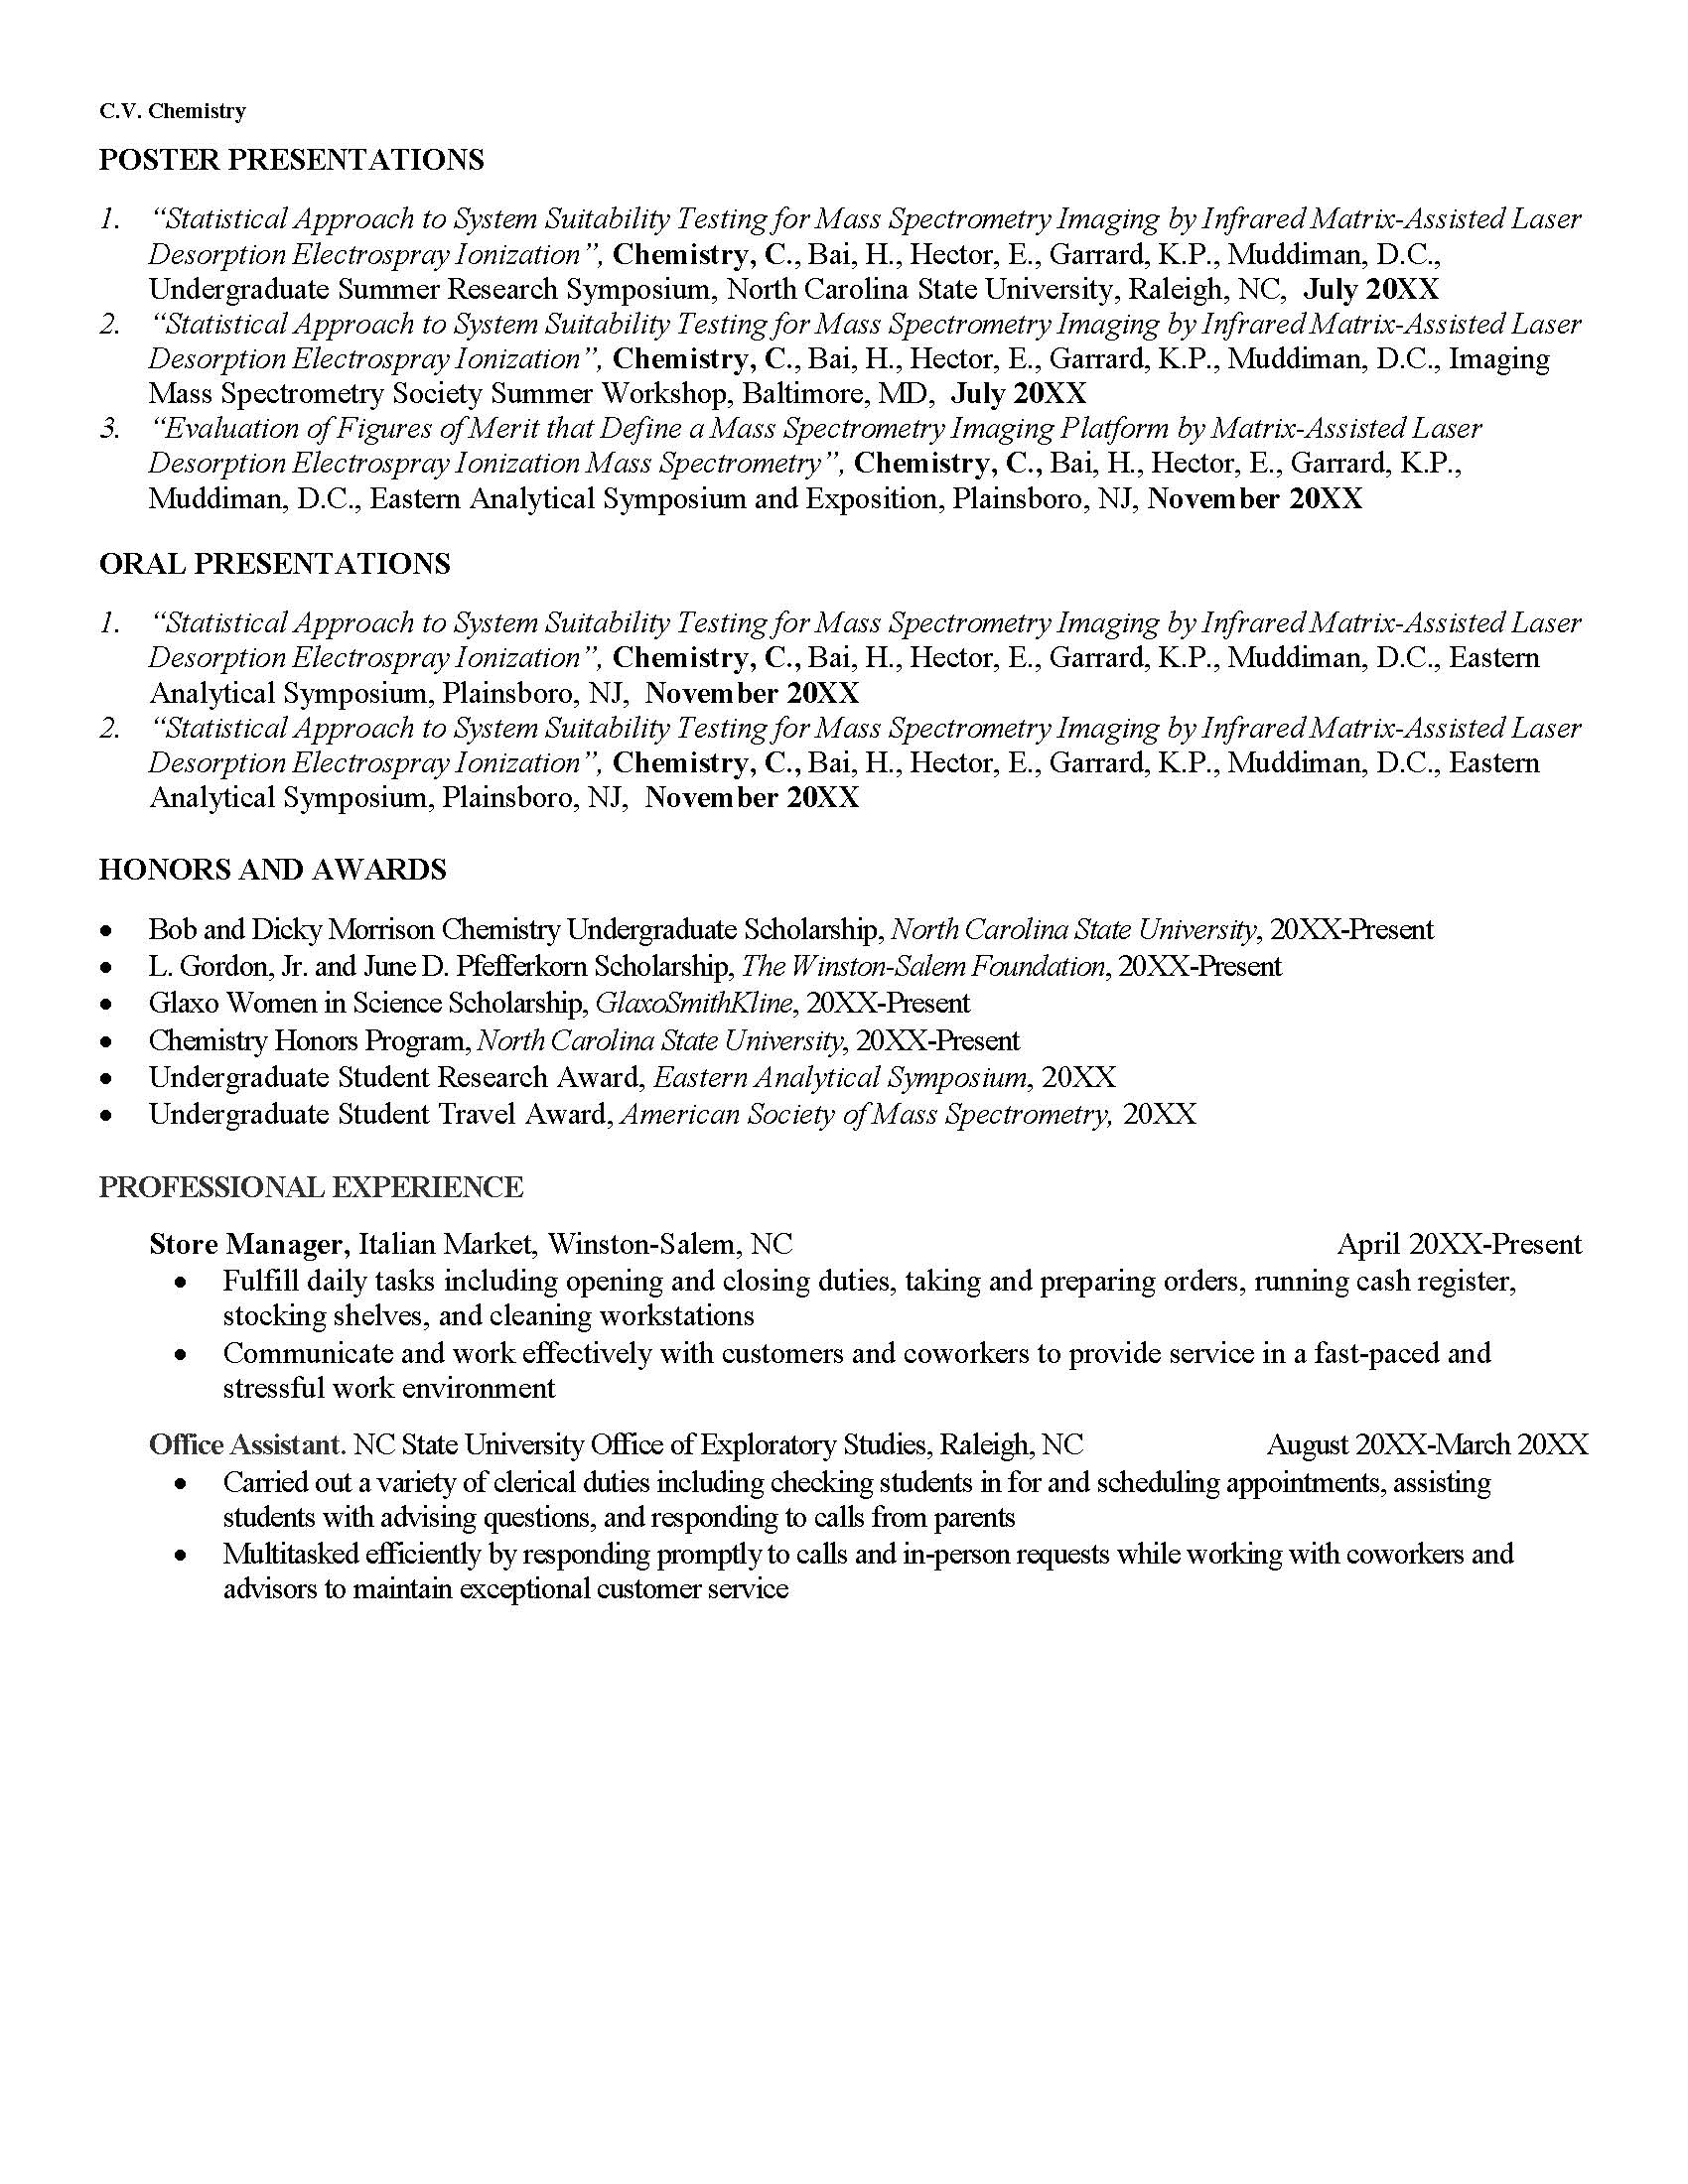 Resume and CV Examples | Career Development Center